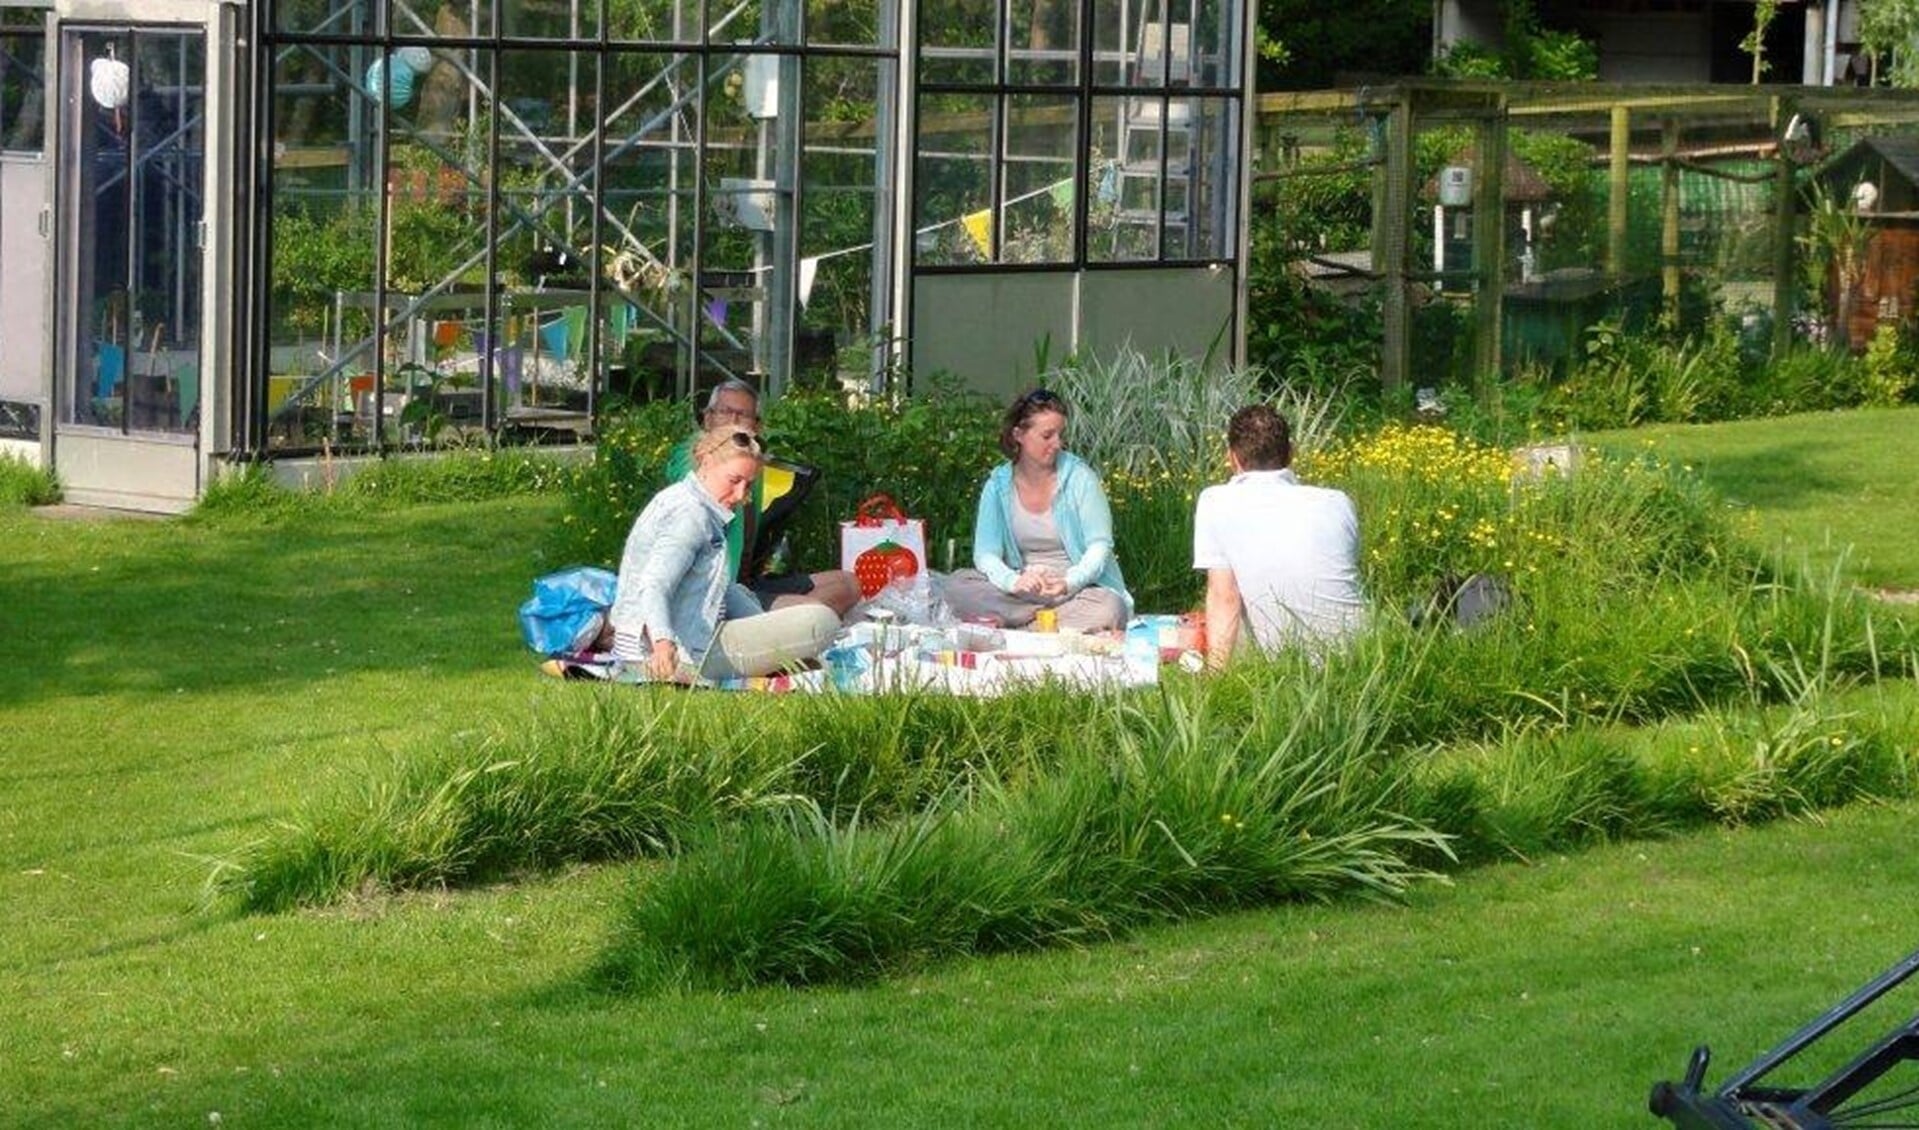 Picknicken in Stadstuin Rusthout (archieffoto pr Stadstuin Rusthout).